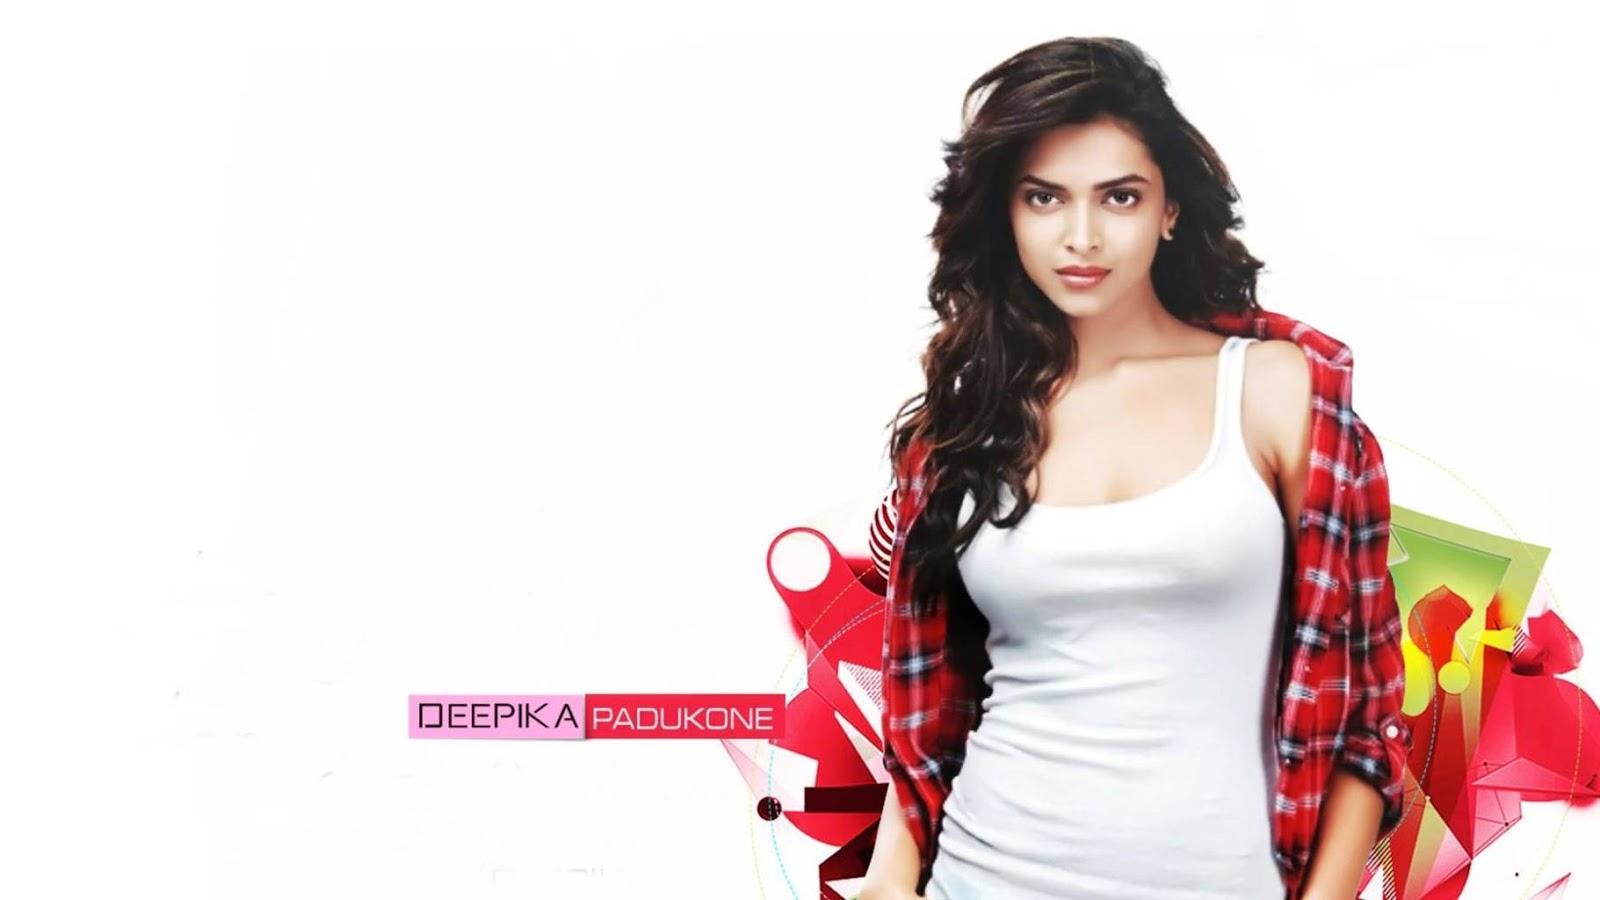 Deepika Padukone Wallpaper HD Download. Deepika Padukone Hot Photo